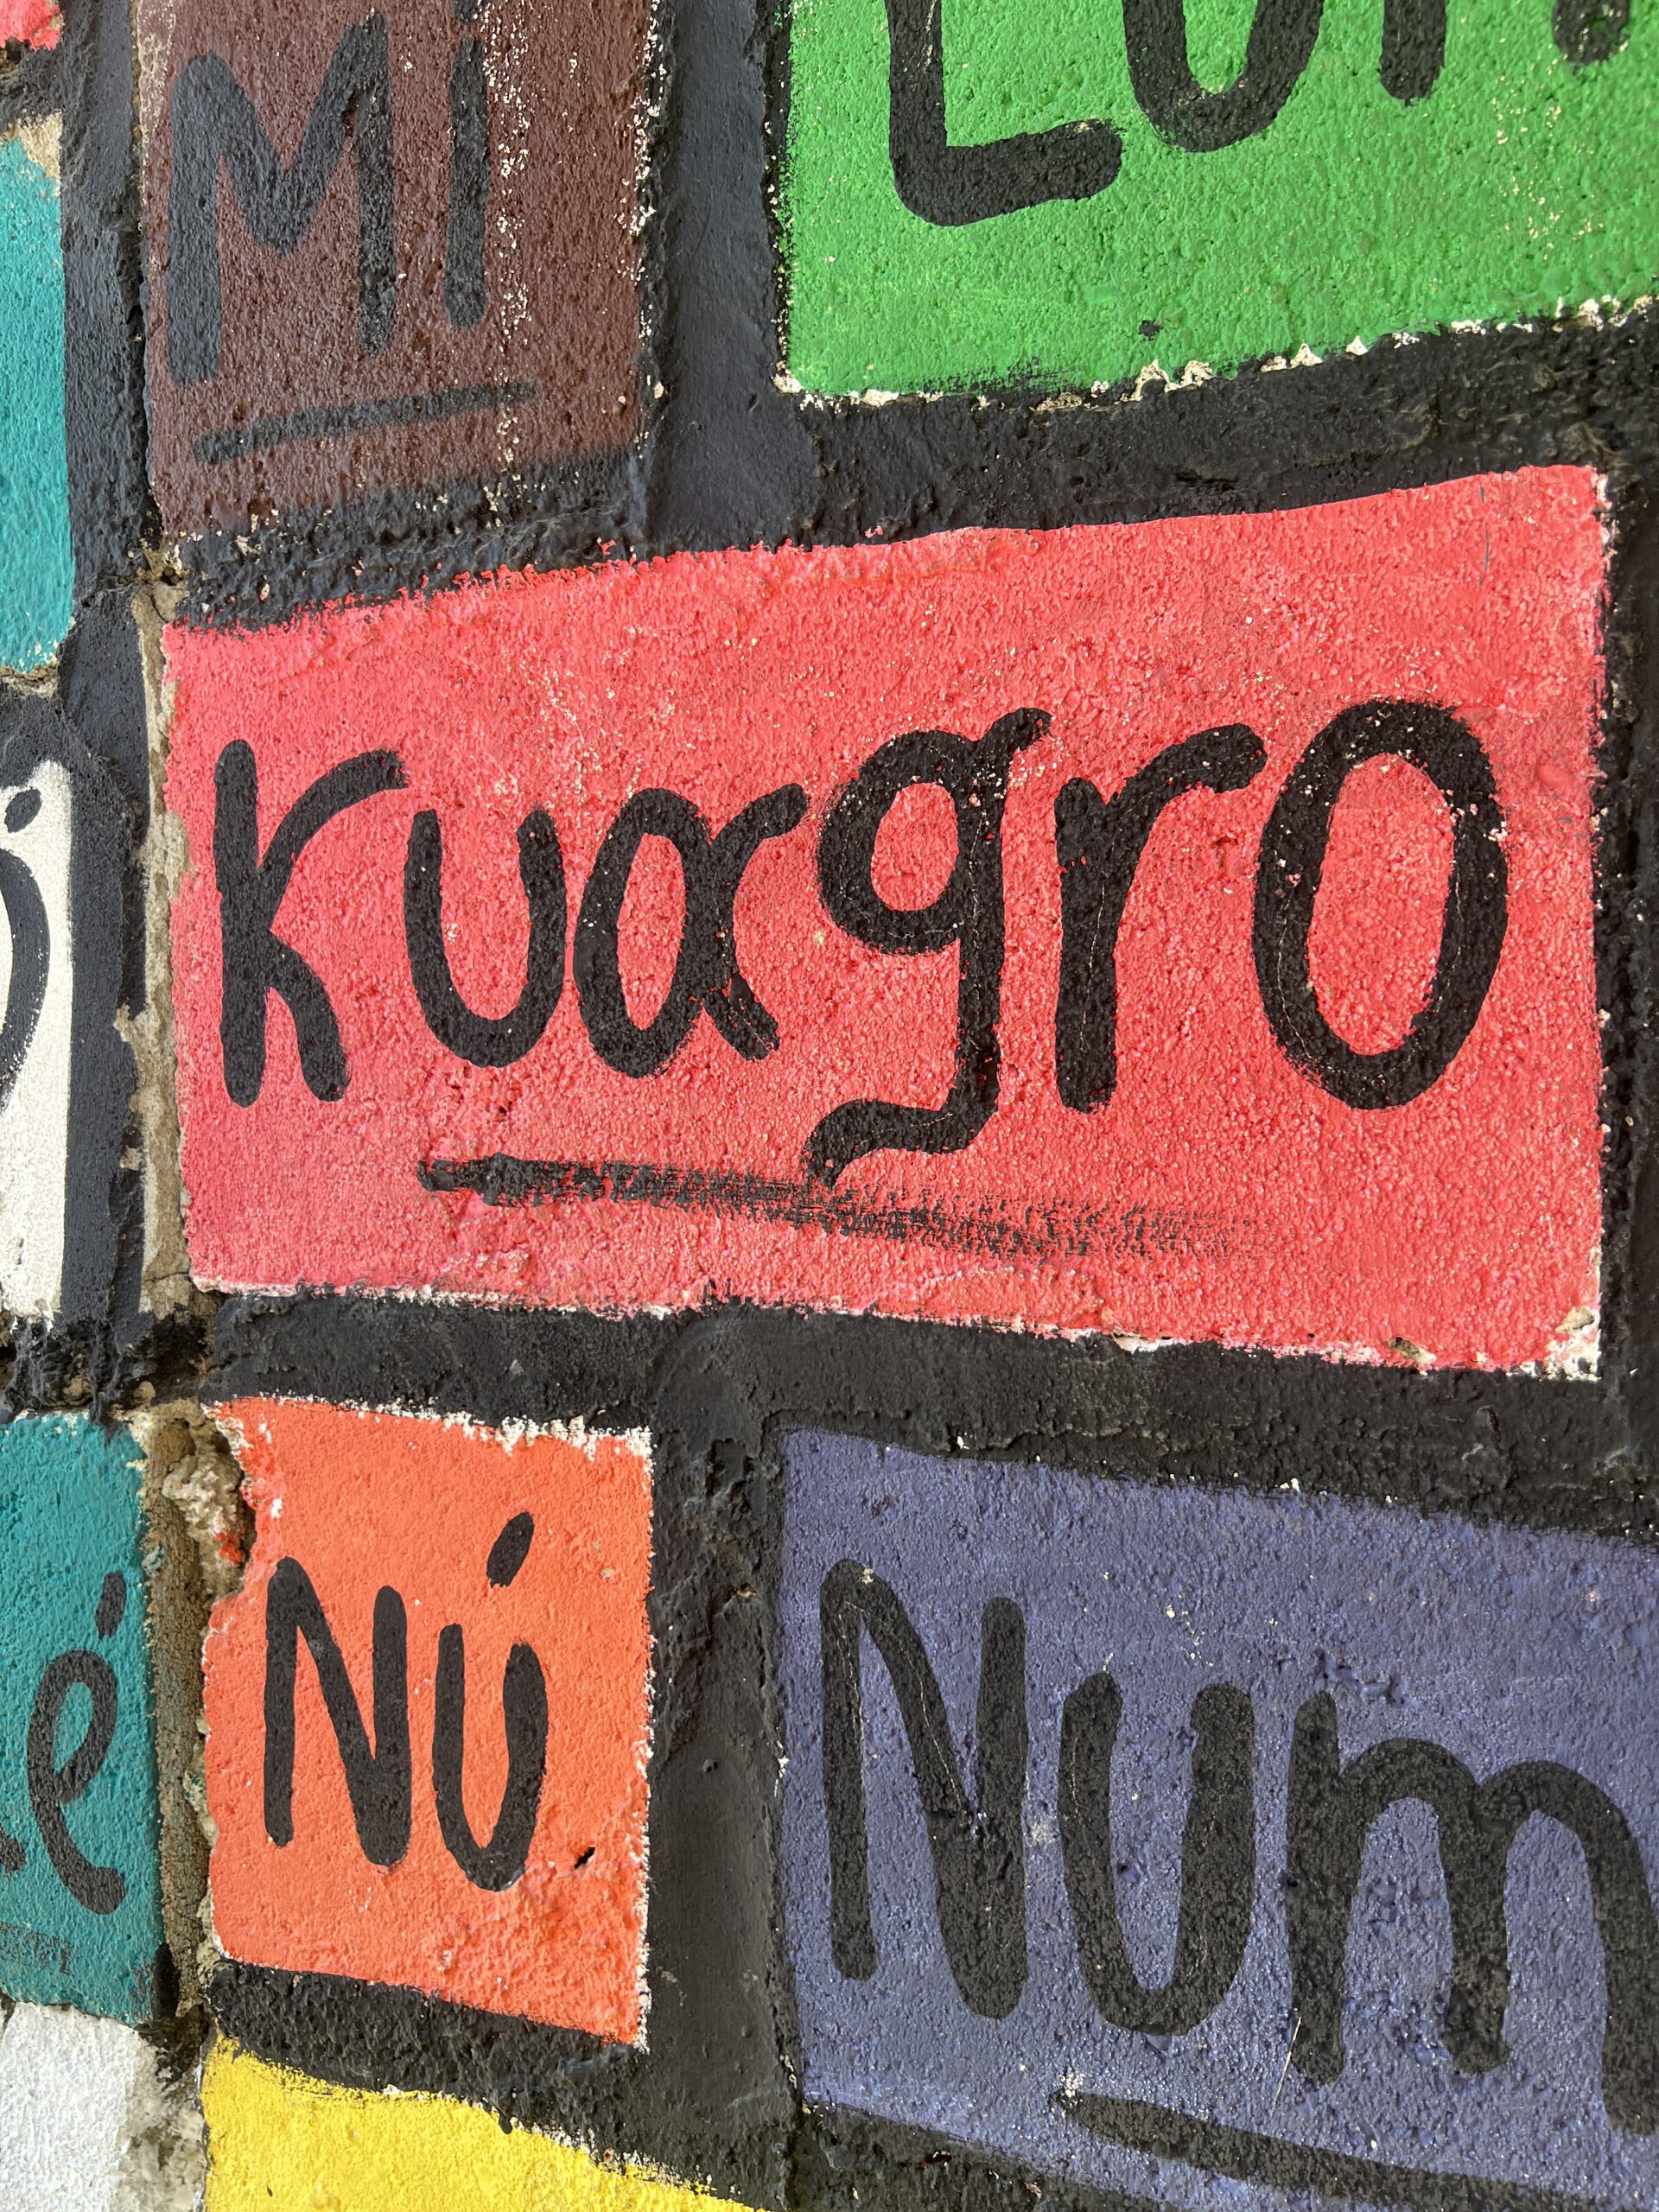 The Palenquero word "Kuagro" written 